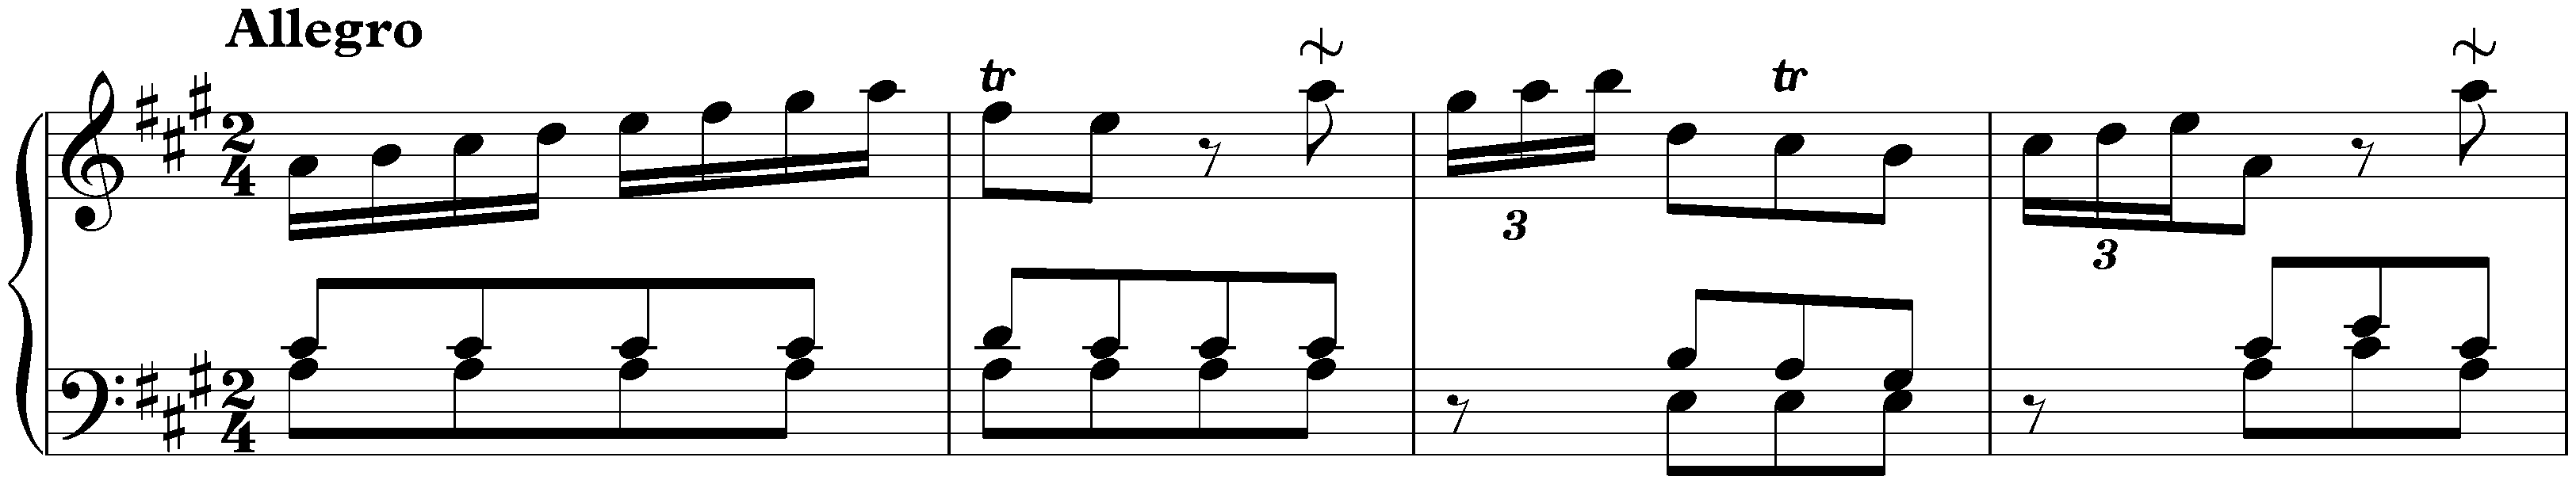 Sonata in A major, Hob. XVI:5; 1. Allegro